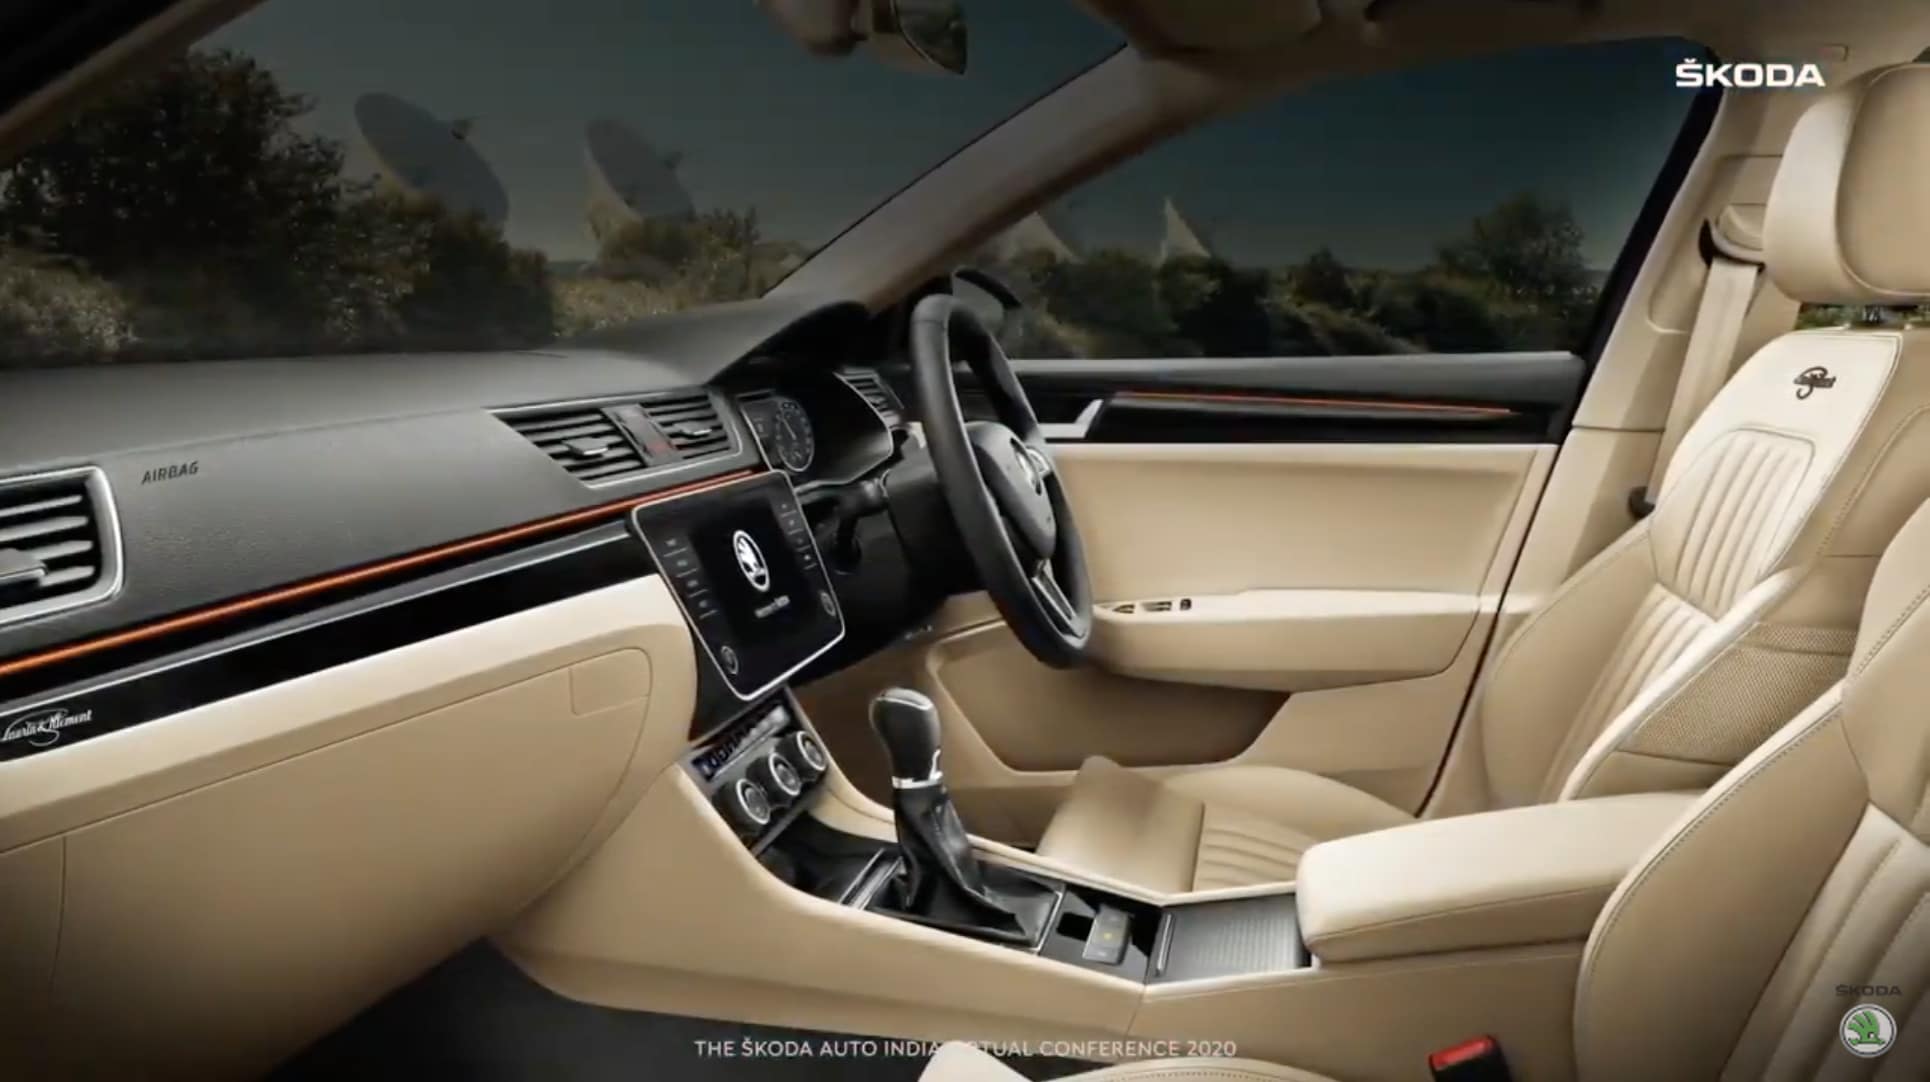 The interior of the new Skoda Superb sedan.